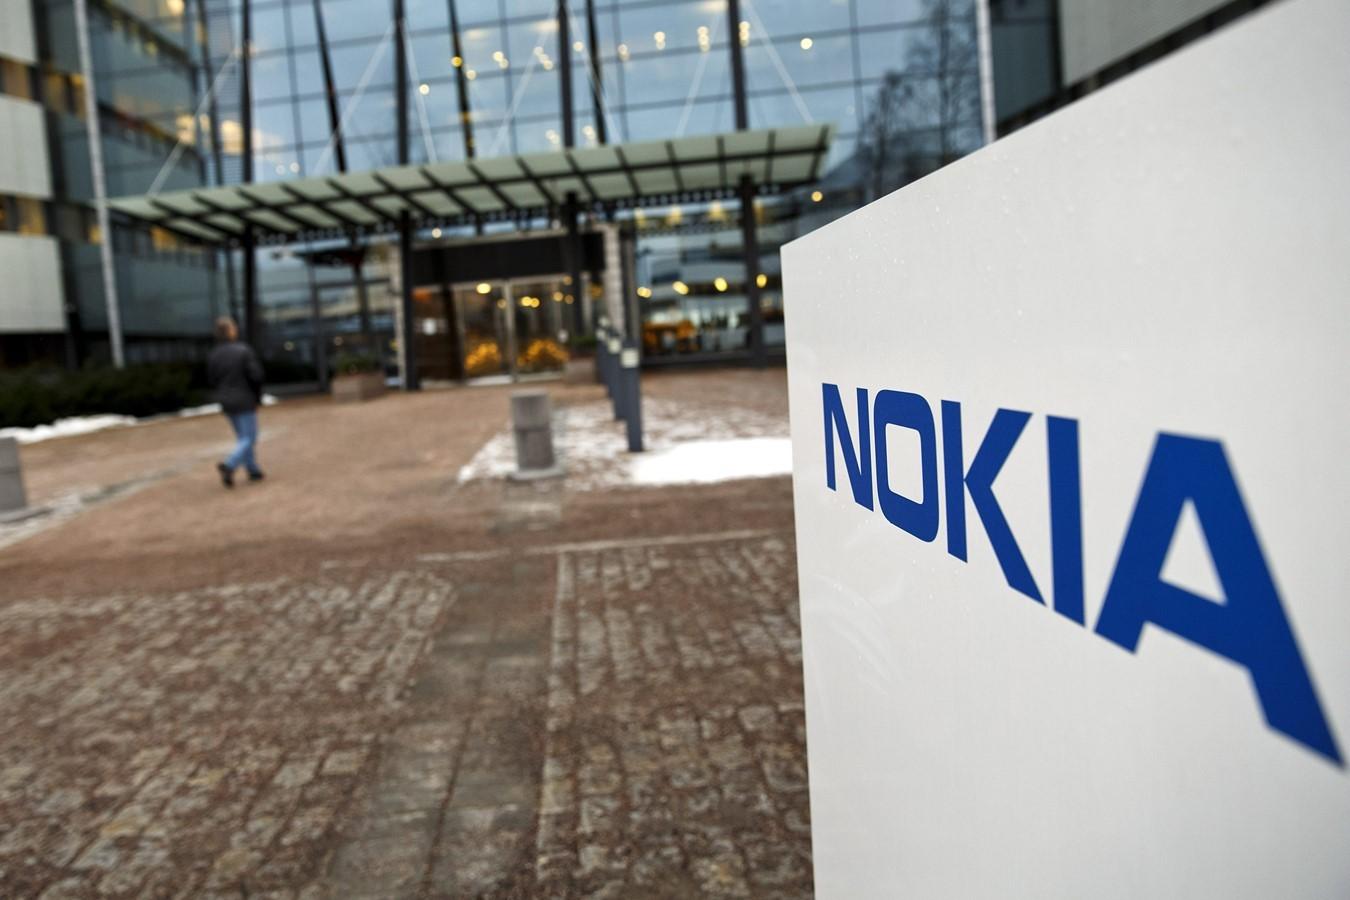 Don't Discount Nokia's Technologies Division - Nokia Corporation (NYSE:NOK)